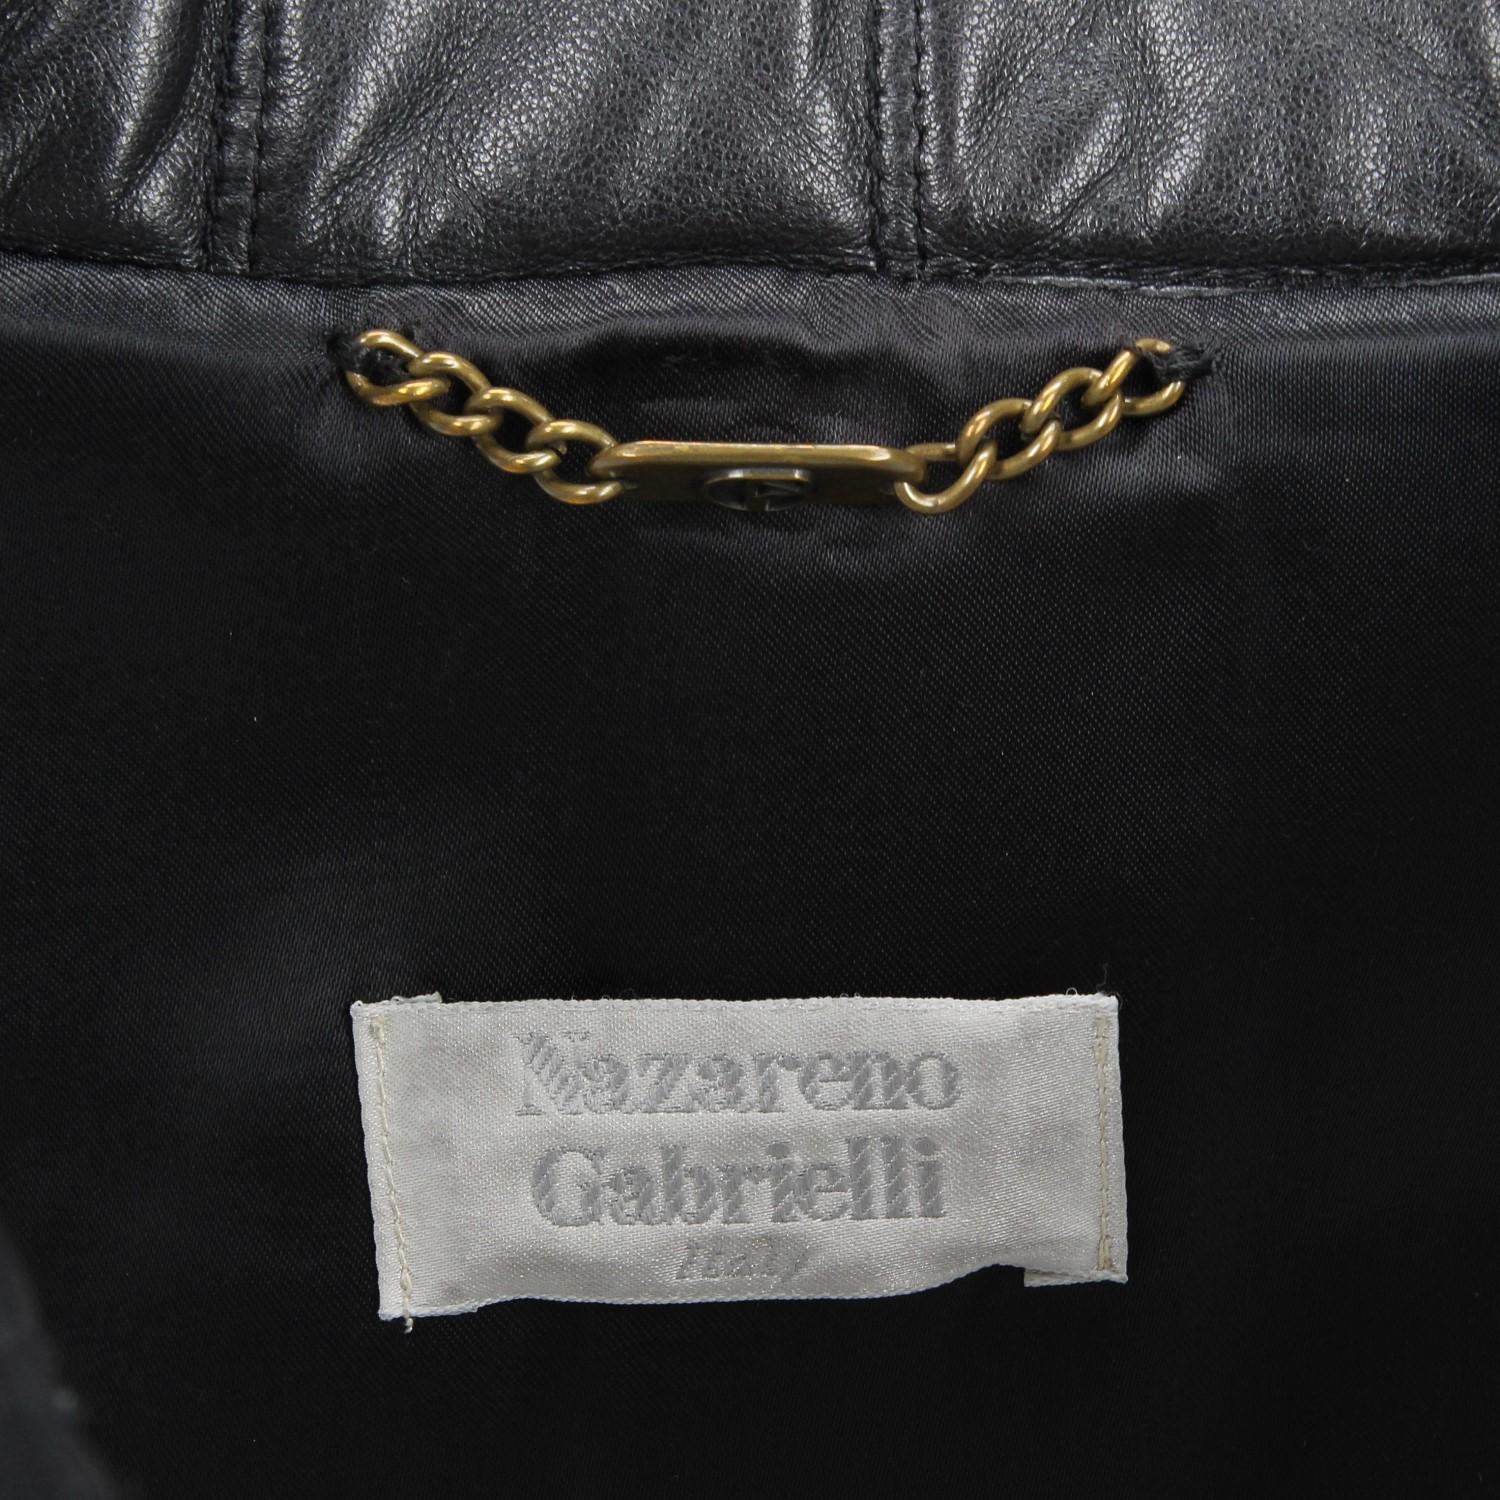 nazareno gabrielli bags price